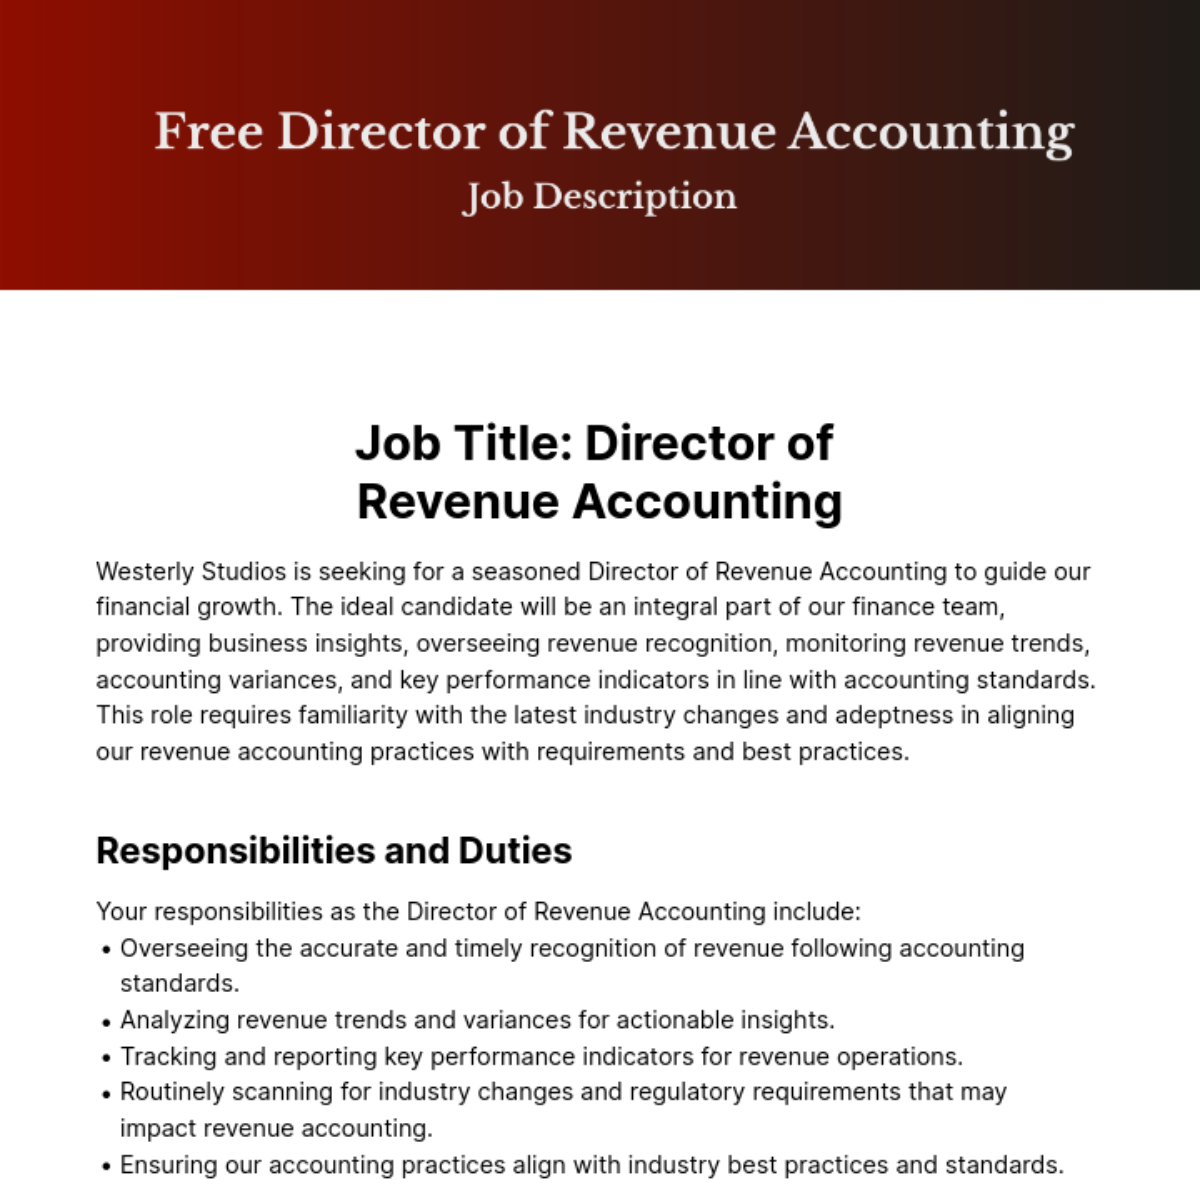 Director of Revenue Accounting Job Description Template